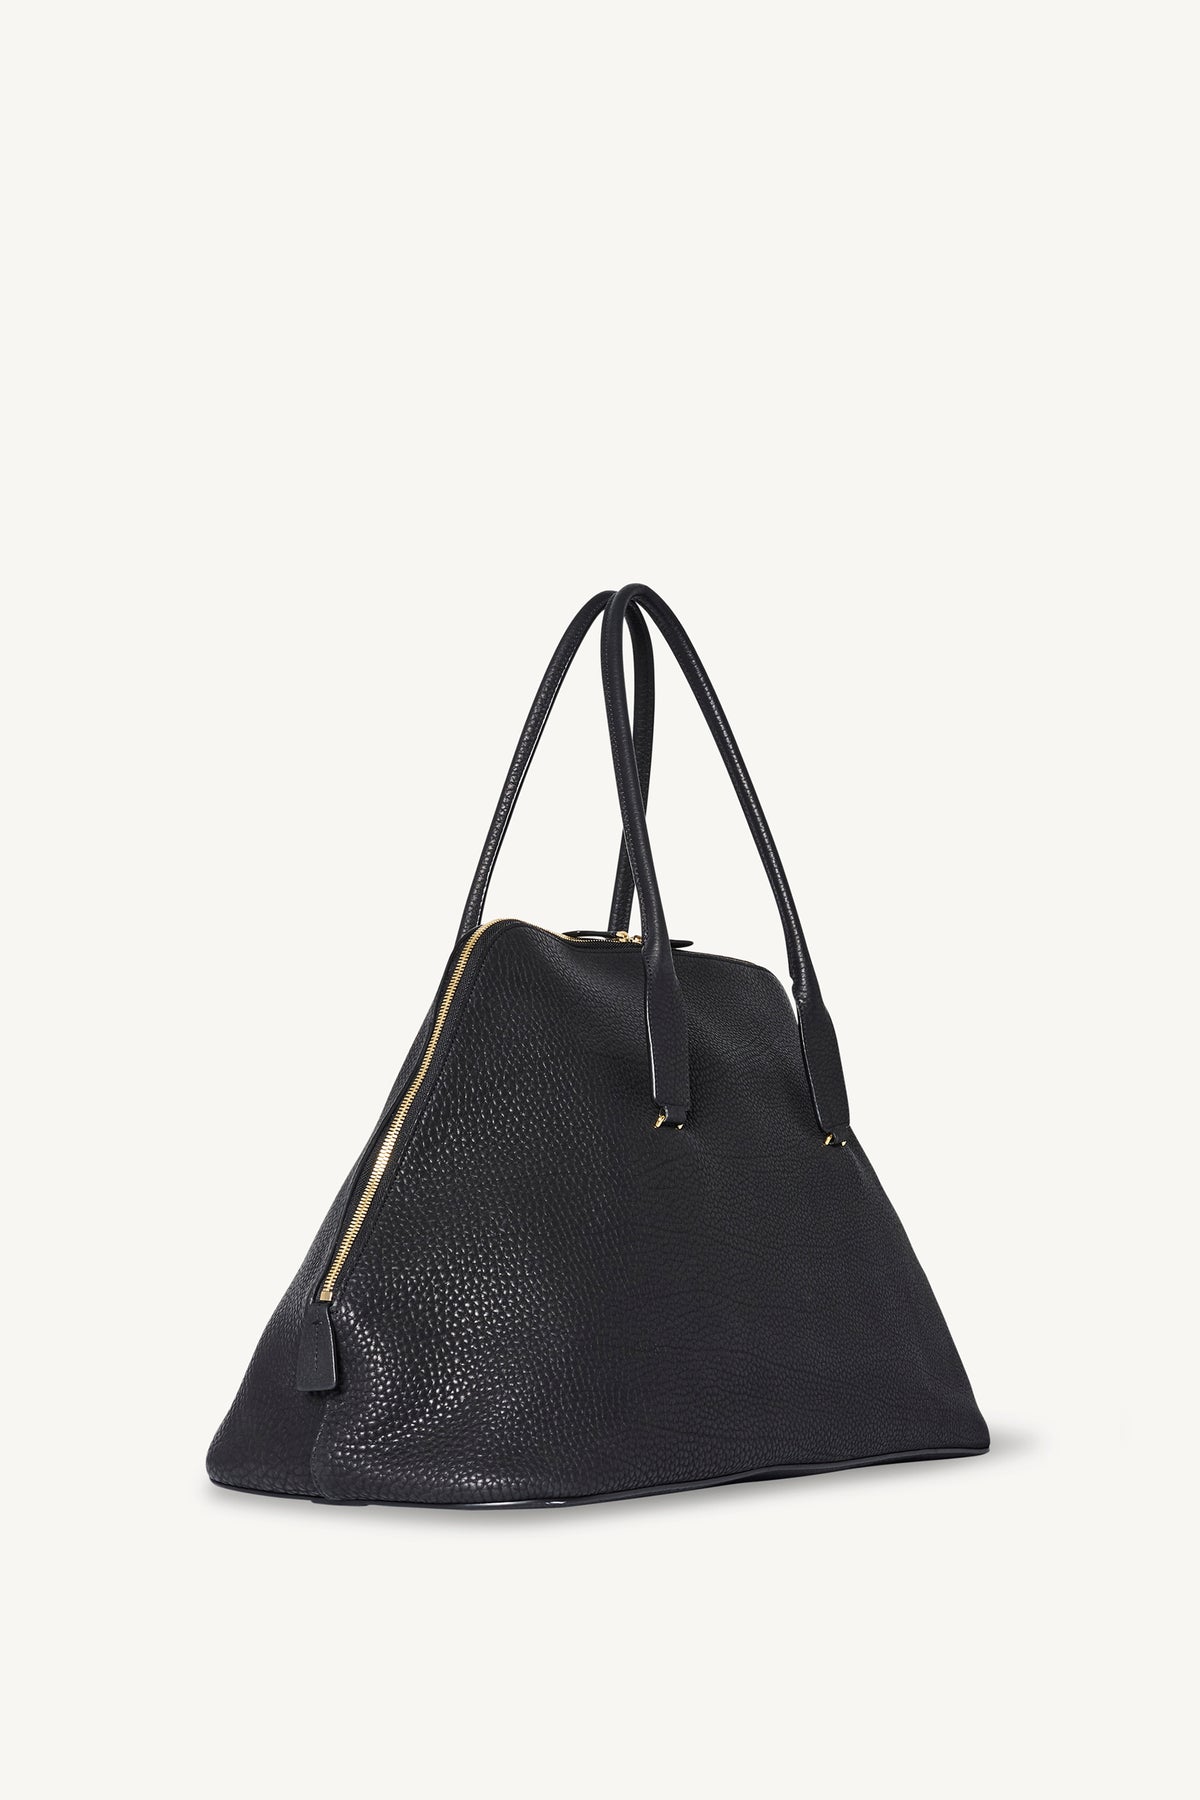 The Row Devon Bag Black | eBay